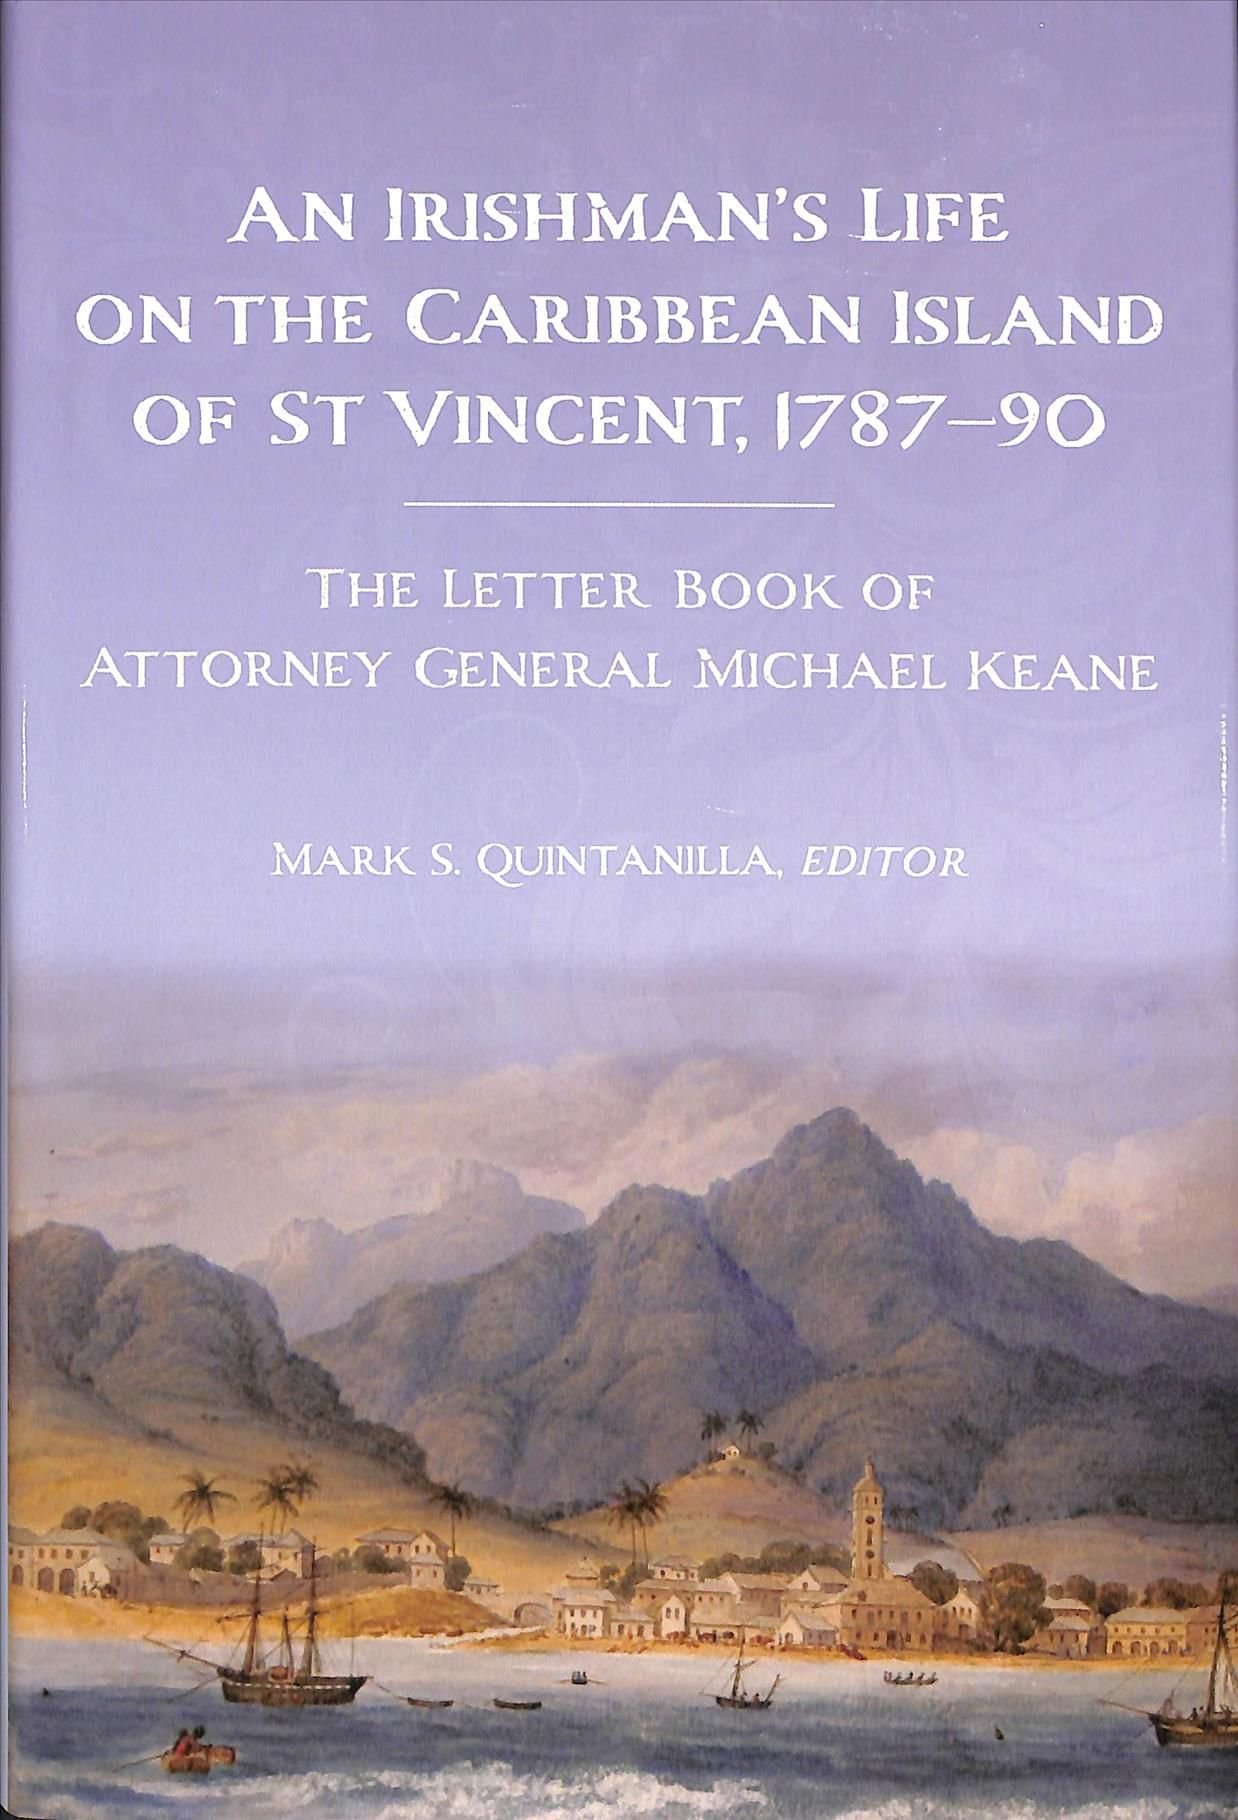 An Irishman's life on the Caribbean island of St Vincent, 1787-90